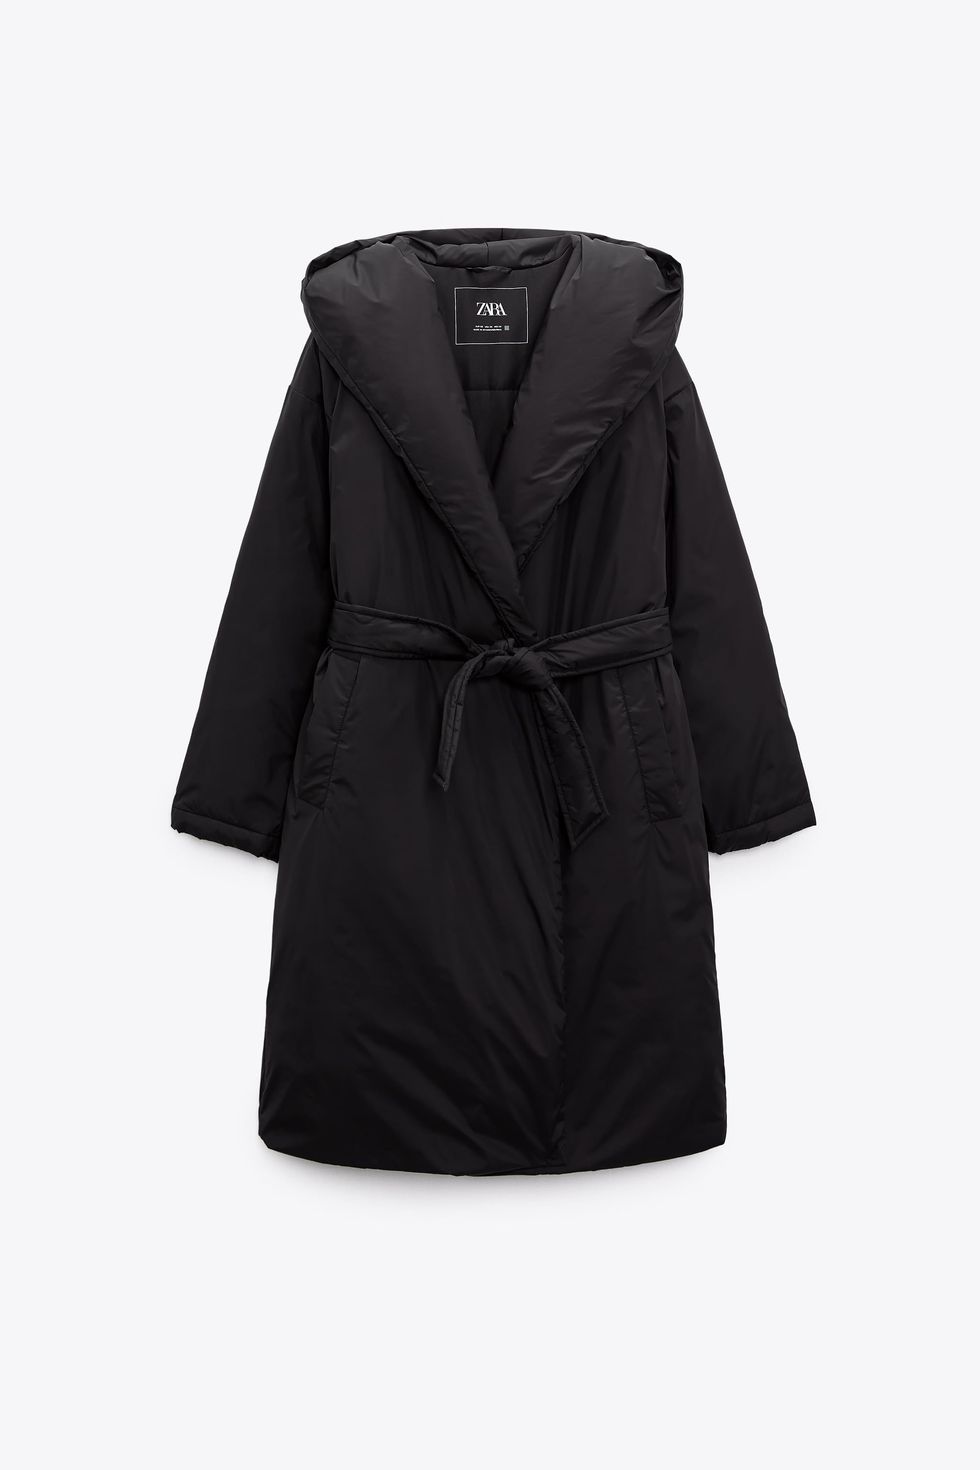 El plumífero de Zara elegante que parece de Hugo Boss: por menos de 30€,  ligero e impermeable